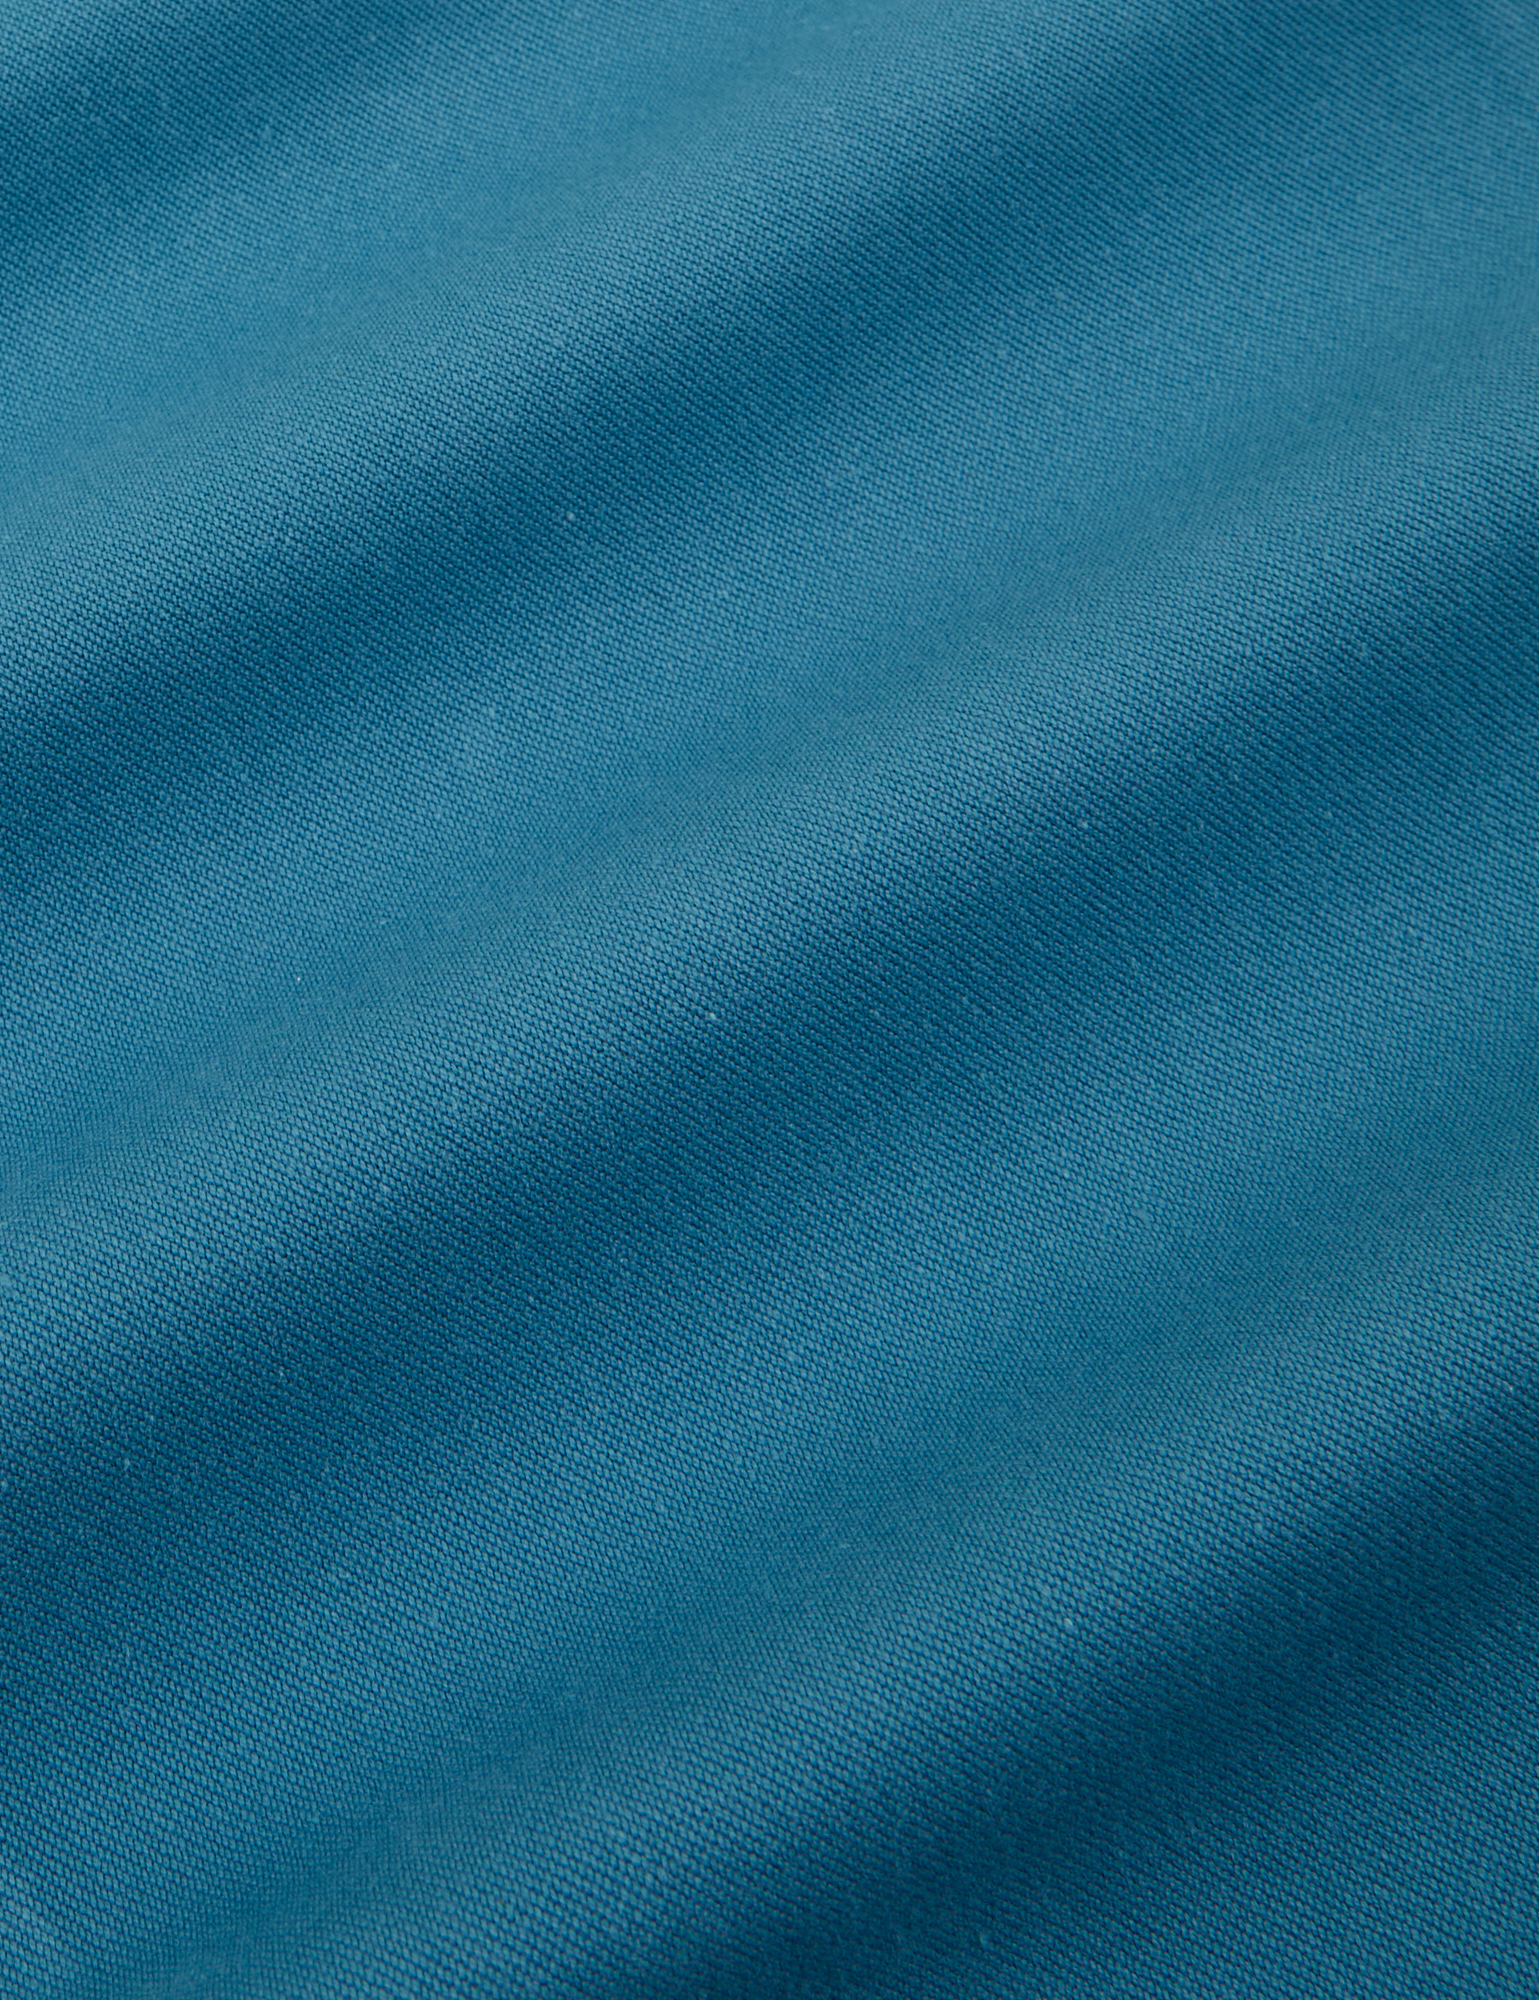 Organic Work Pants in Marine Blue fabric detail